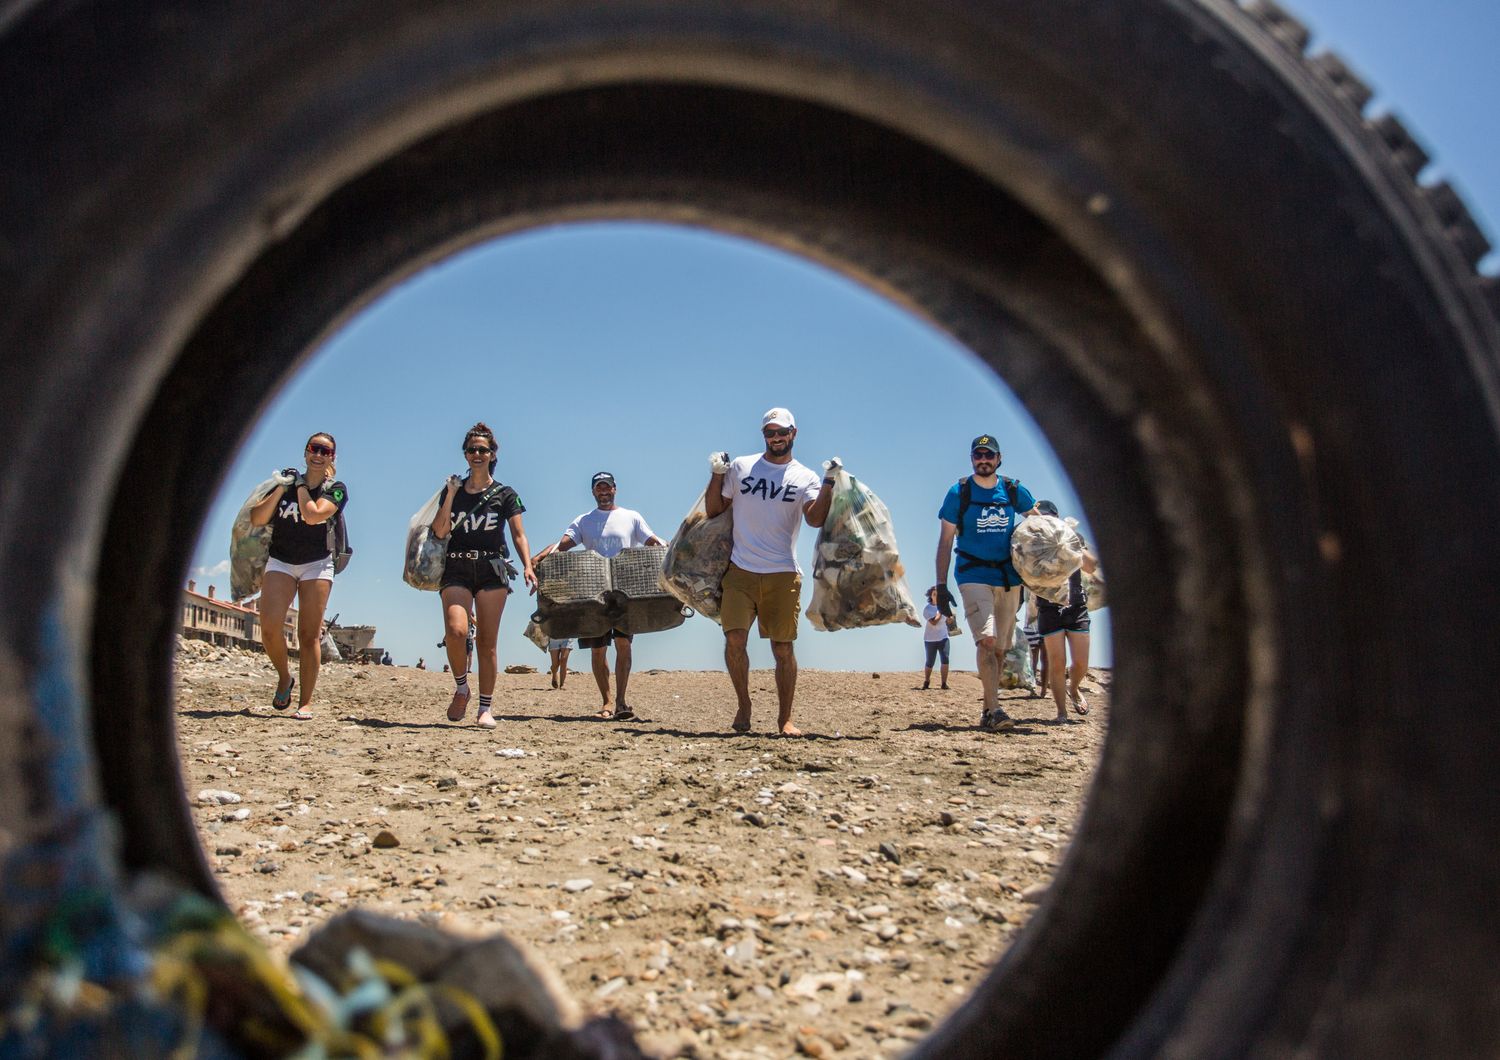 mare di rifiuti legambiente ripropone campagna spiagge fondali puliti